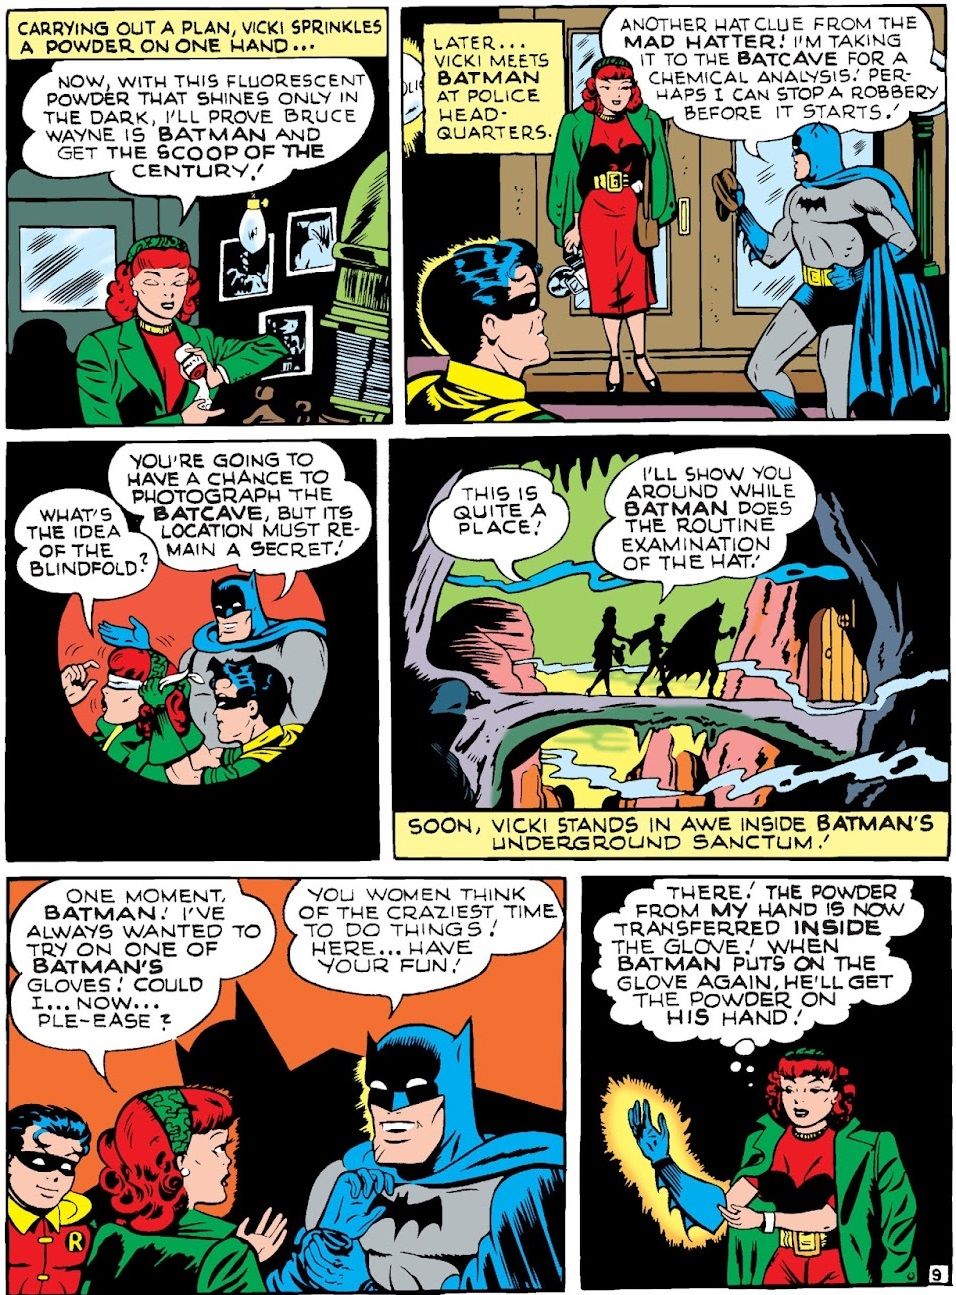 Vicki Vale tries to trick Batman into revealing he is Bruce Wayne